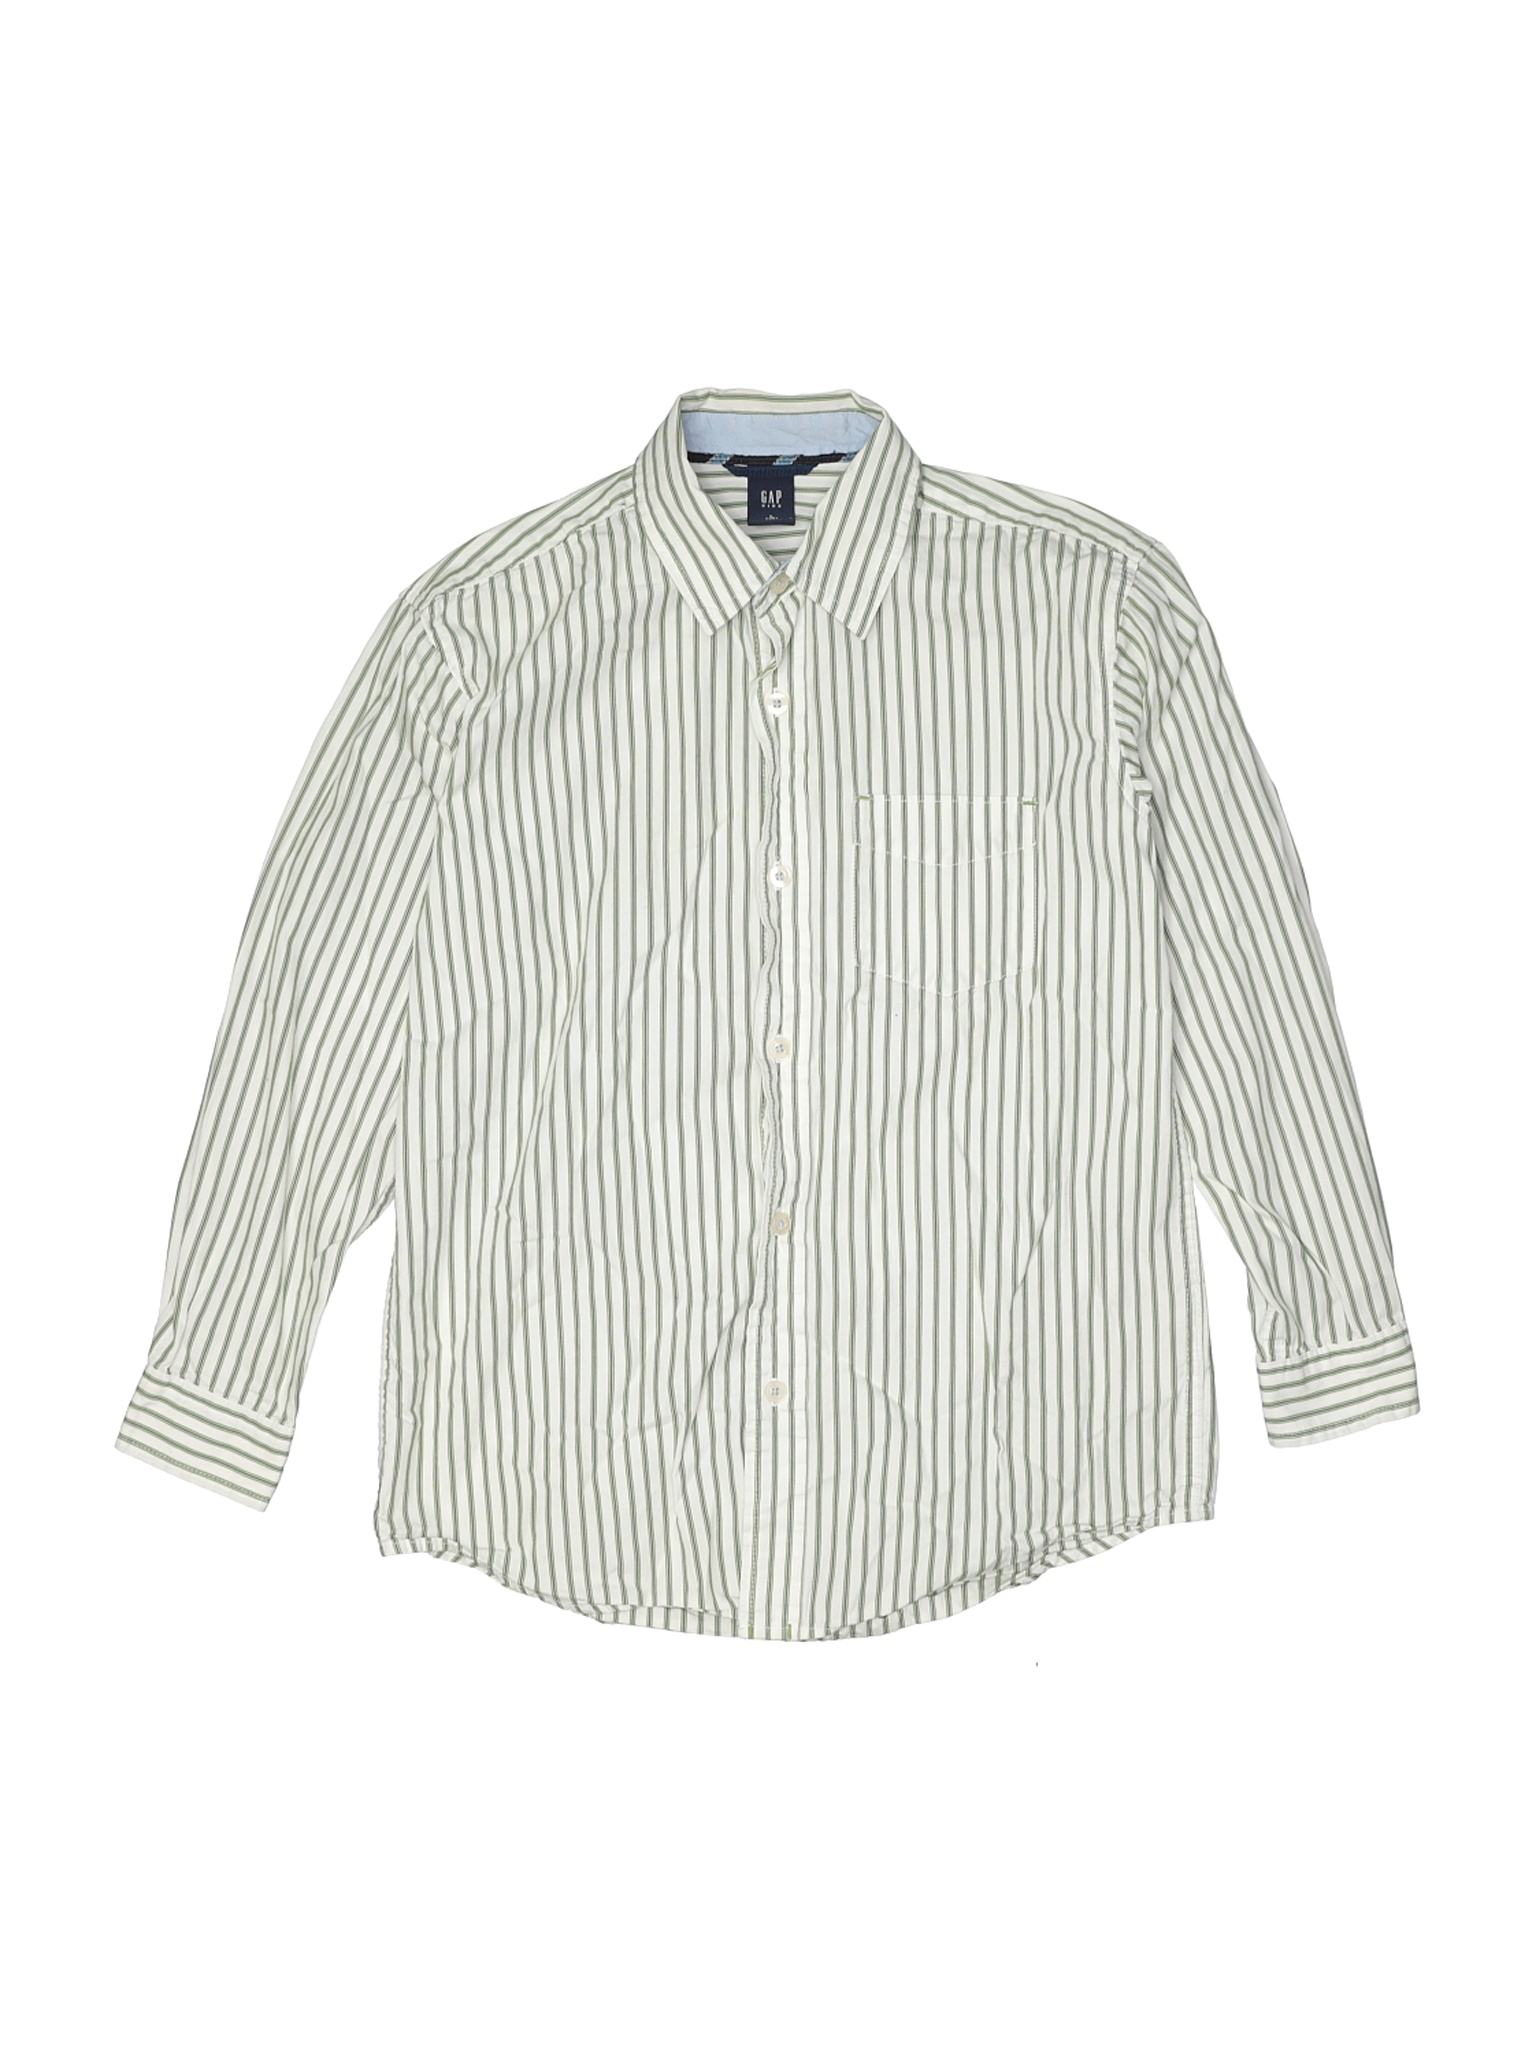 Gap Kids Boys Green Long Sleeve Button-Down Shirt 10 | eBay